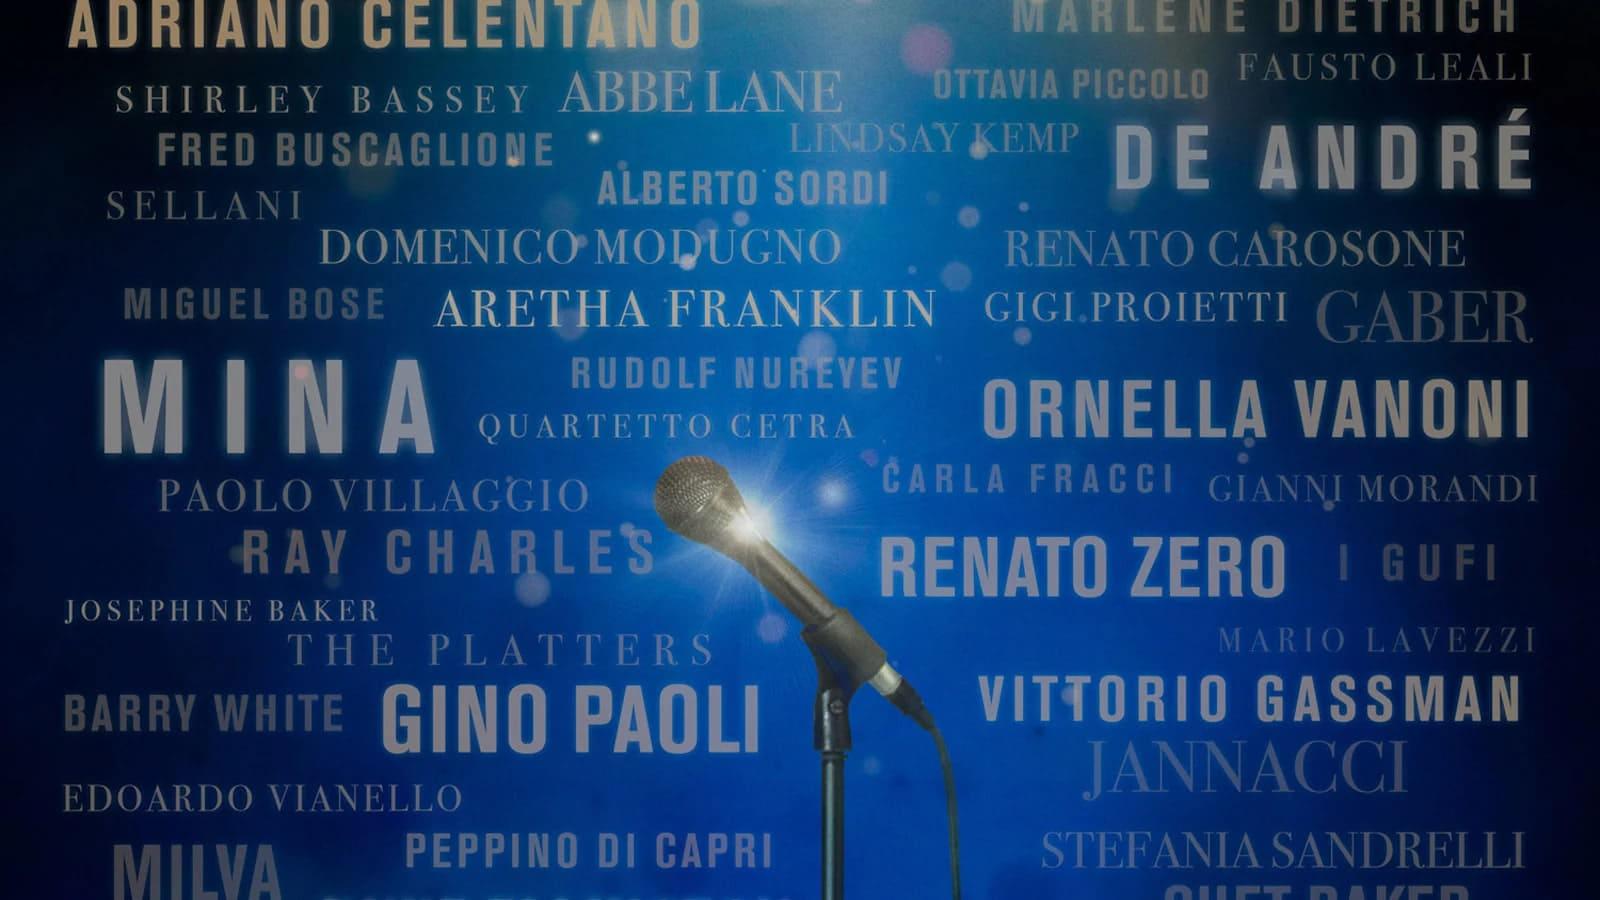 Massimo Moratti backdrop